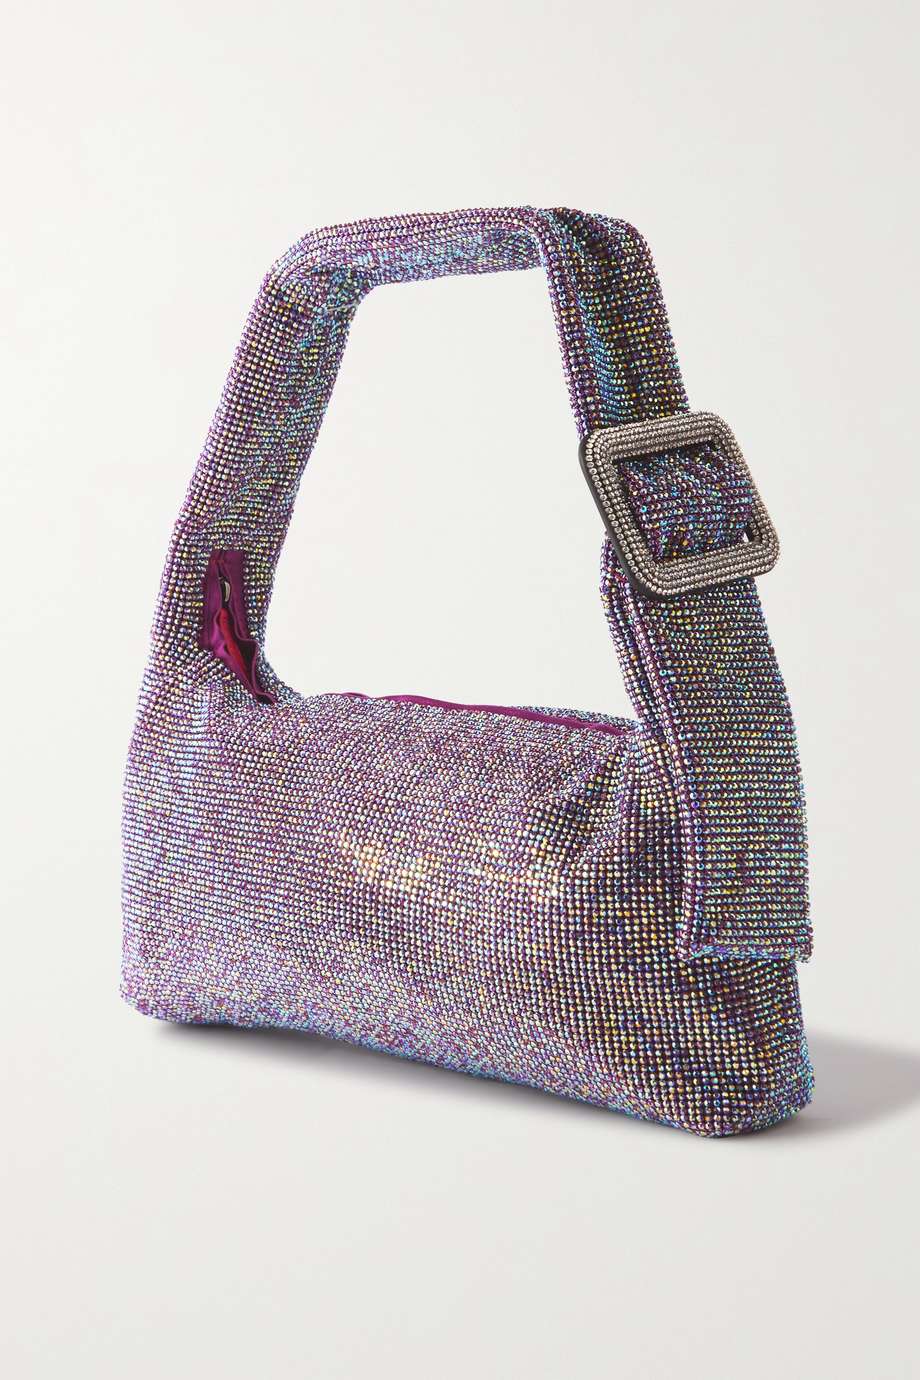 Benedetta Bruzziches Pina Bausch Crystal-Embellished Satin Shoulder Bag